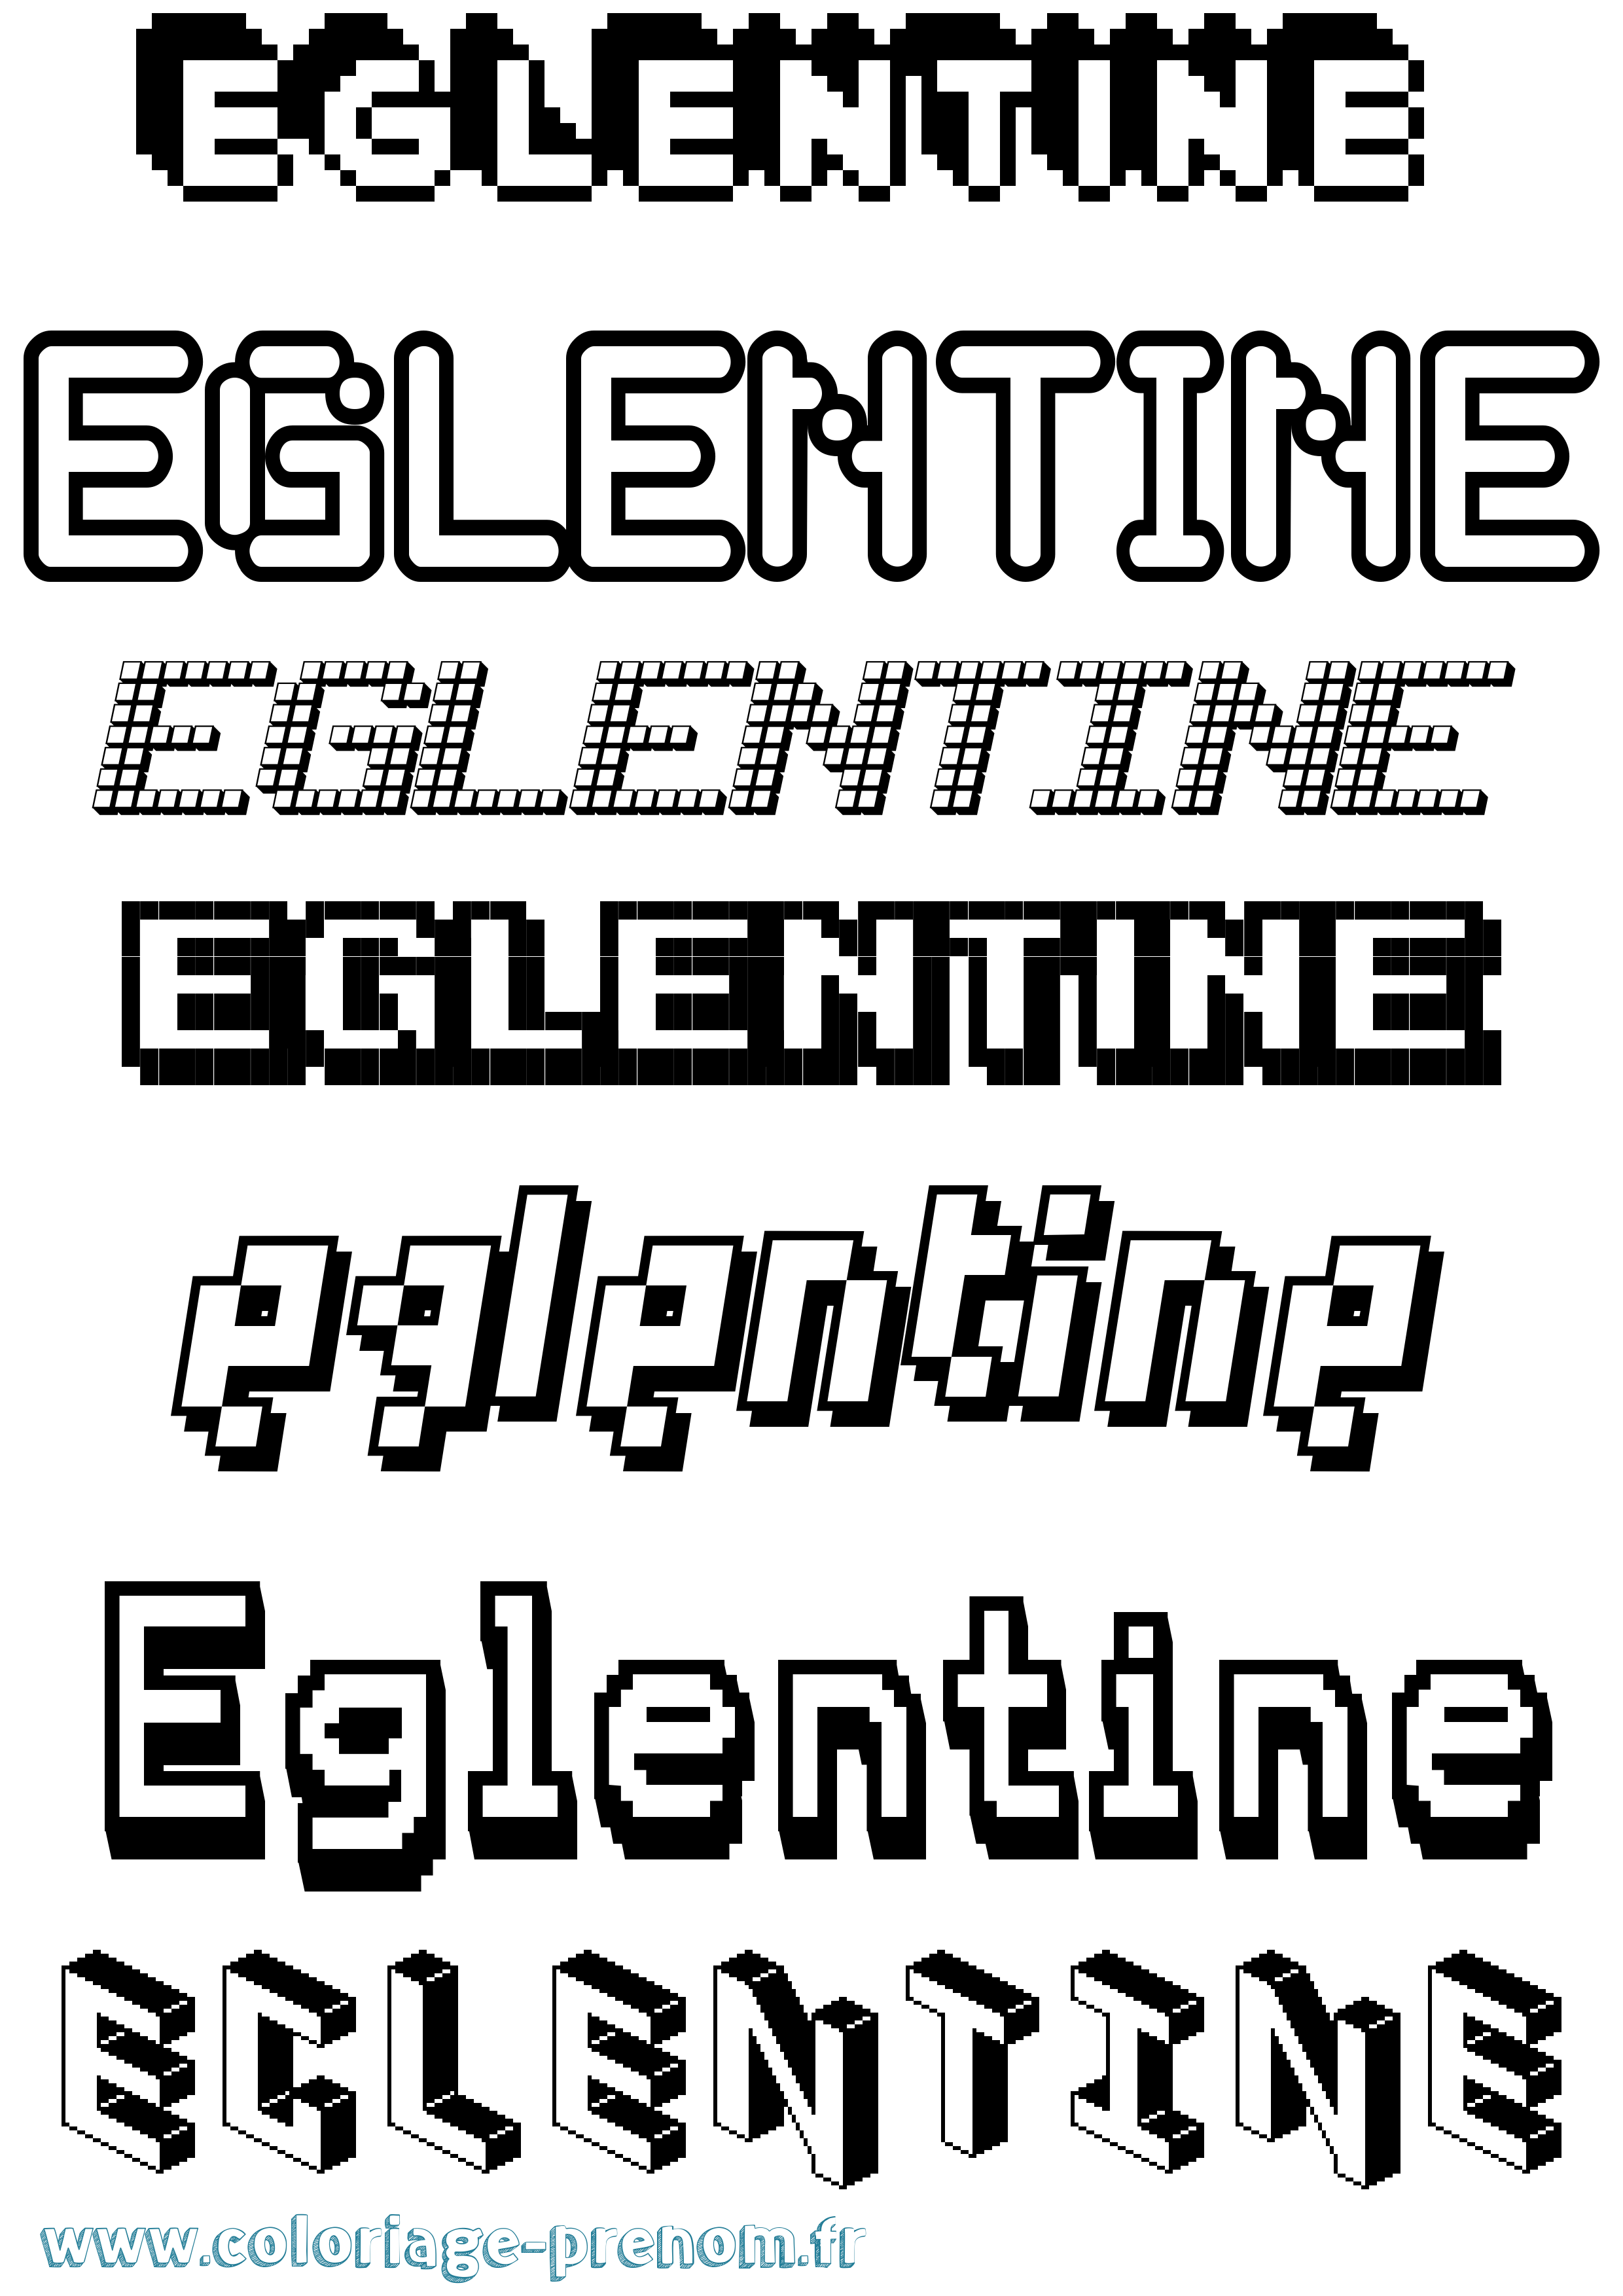 Coloriage prénom Eglentine Pixel